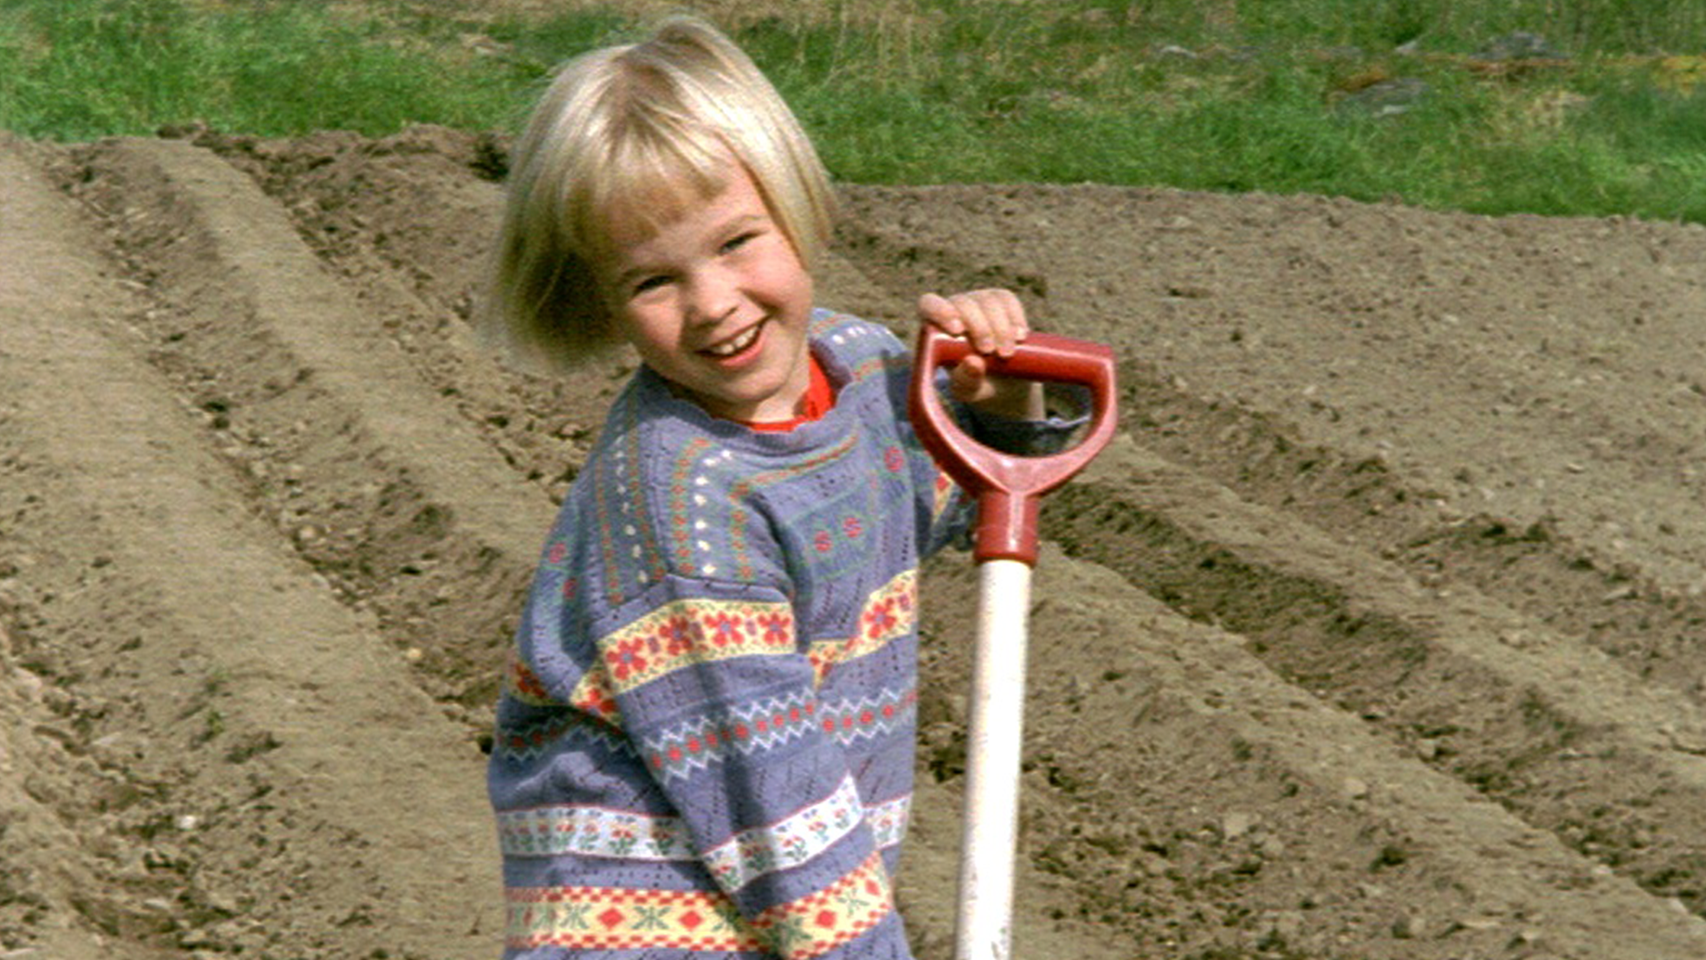 Reetta digging soil as a child 